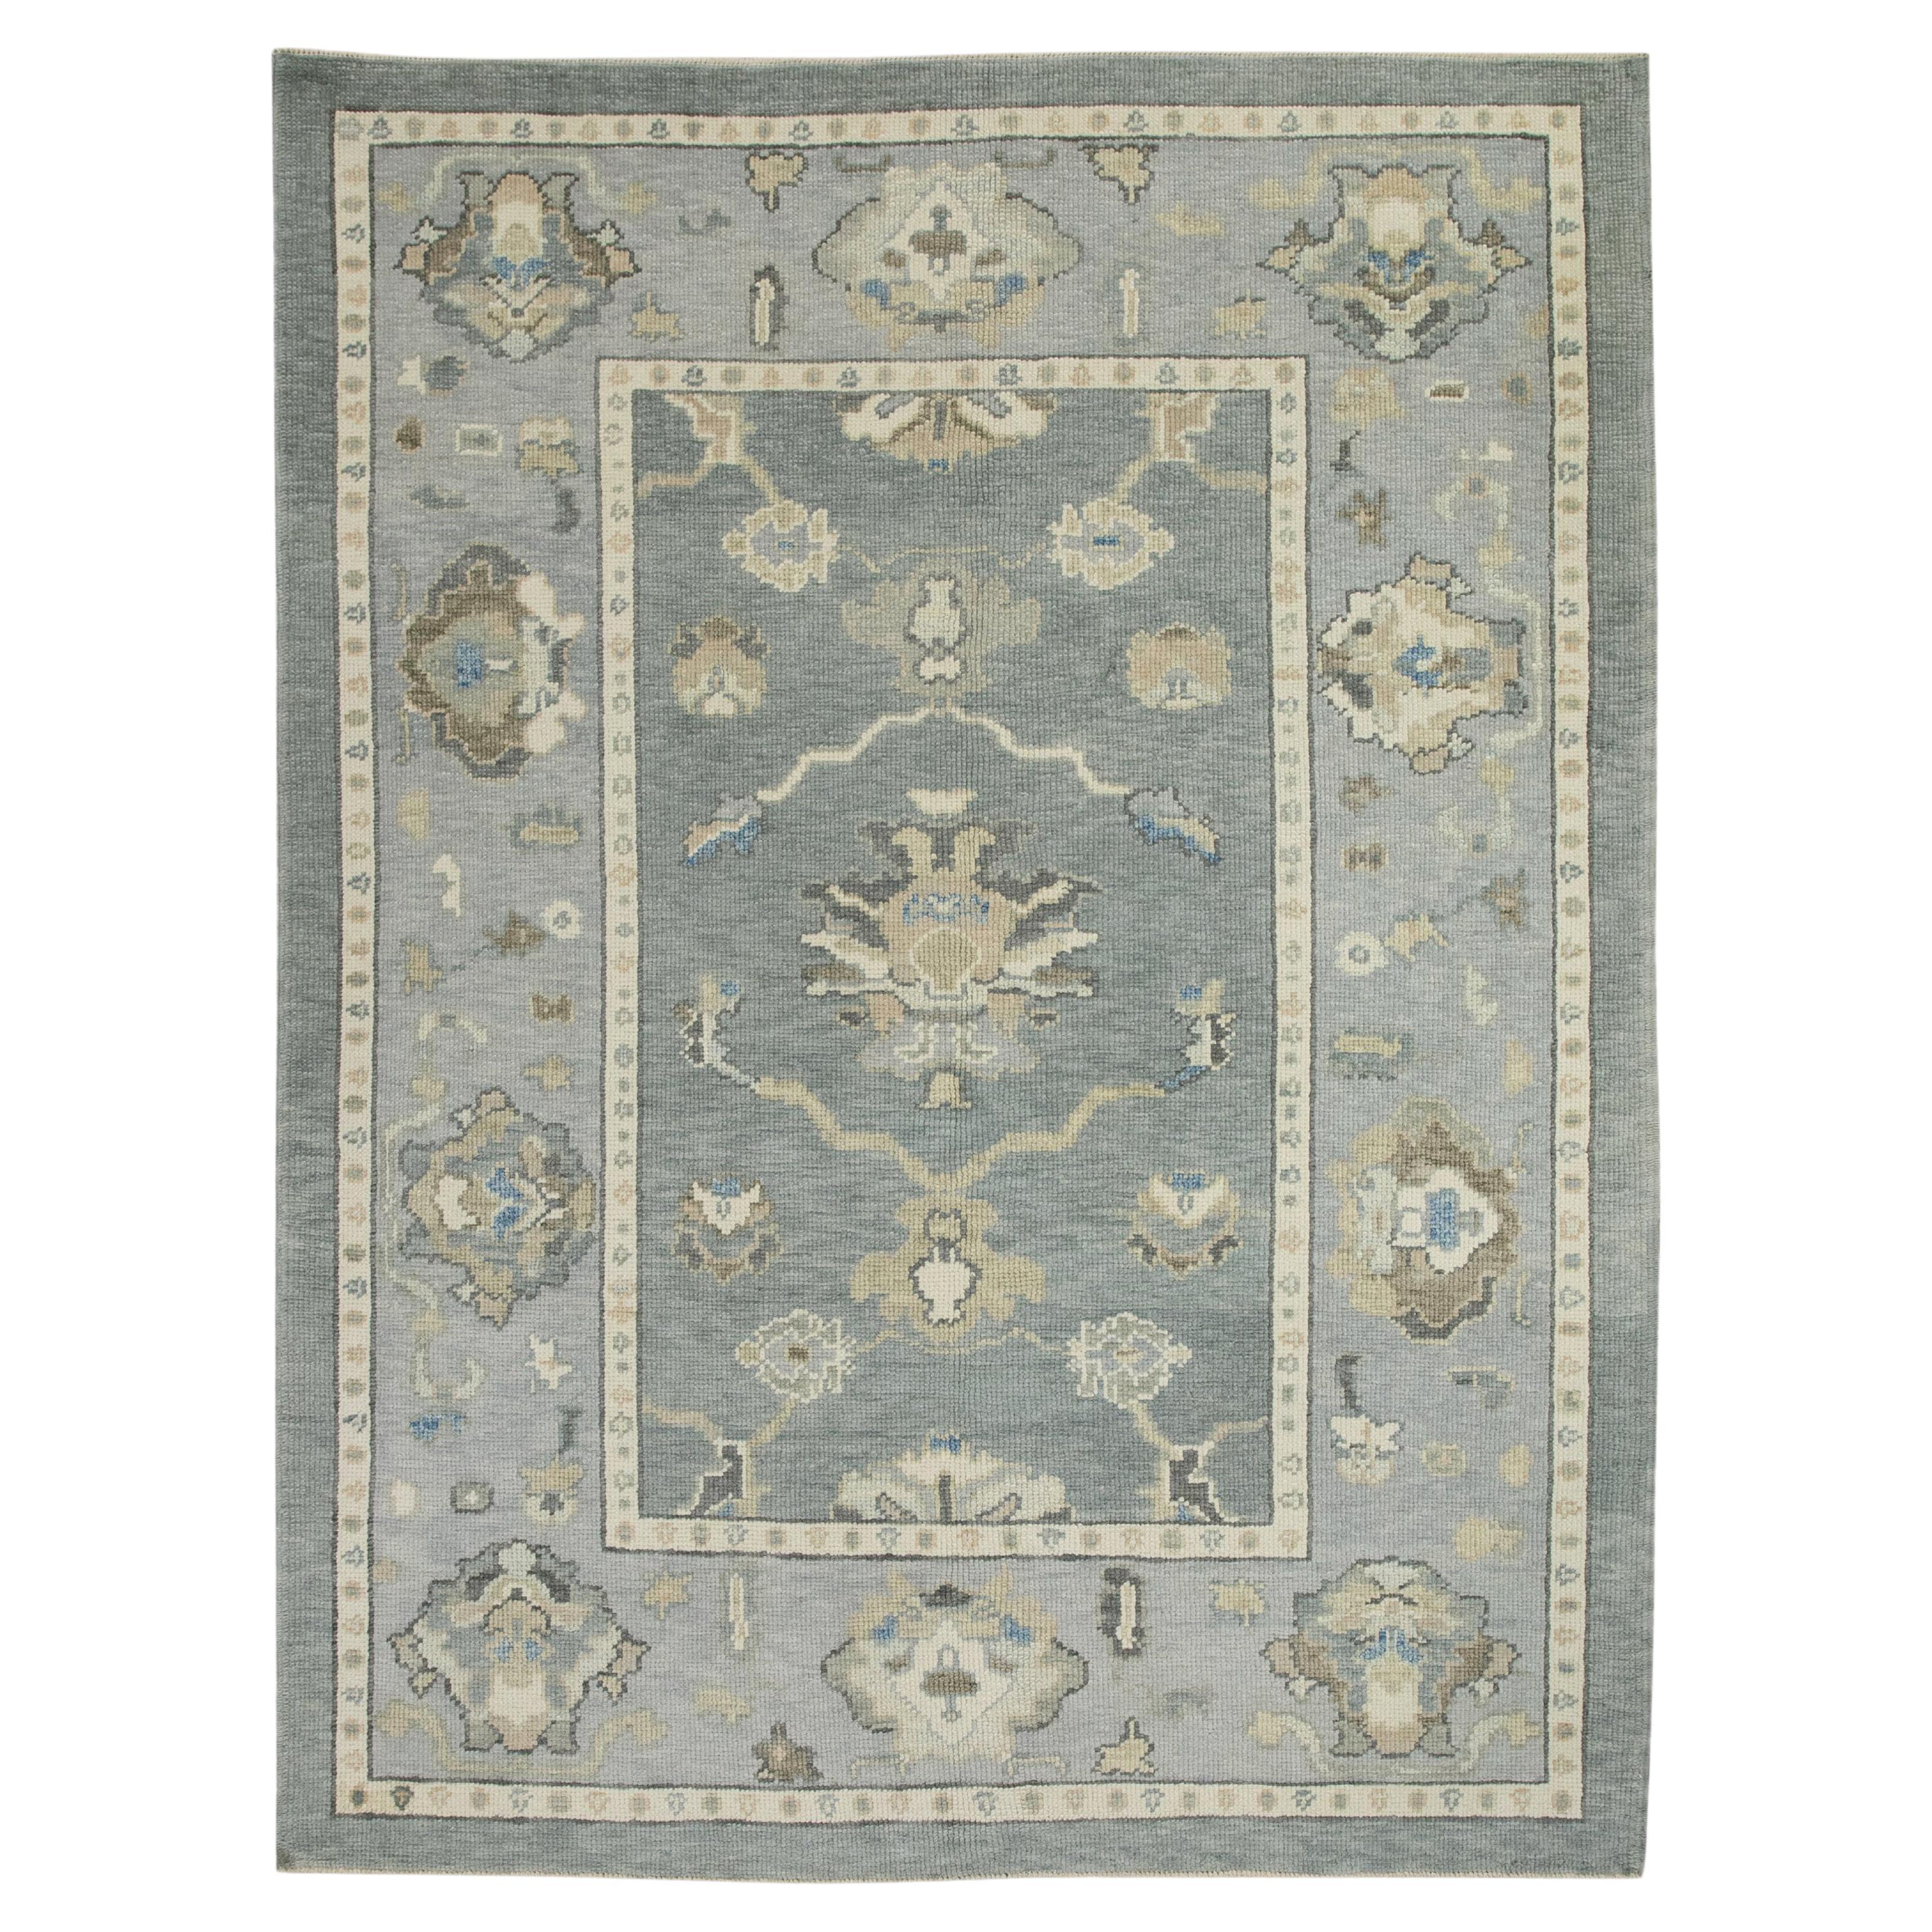 Gray & Blue Floral Design Handwoven Wool Turkish Oushak Rug 5'2" x 6'7"